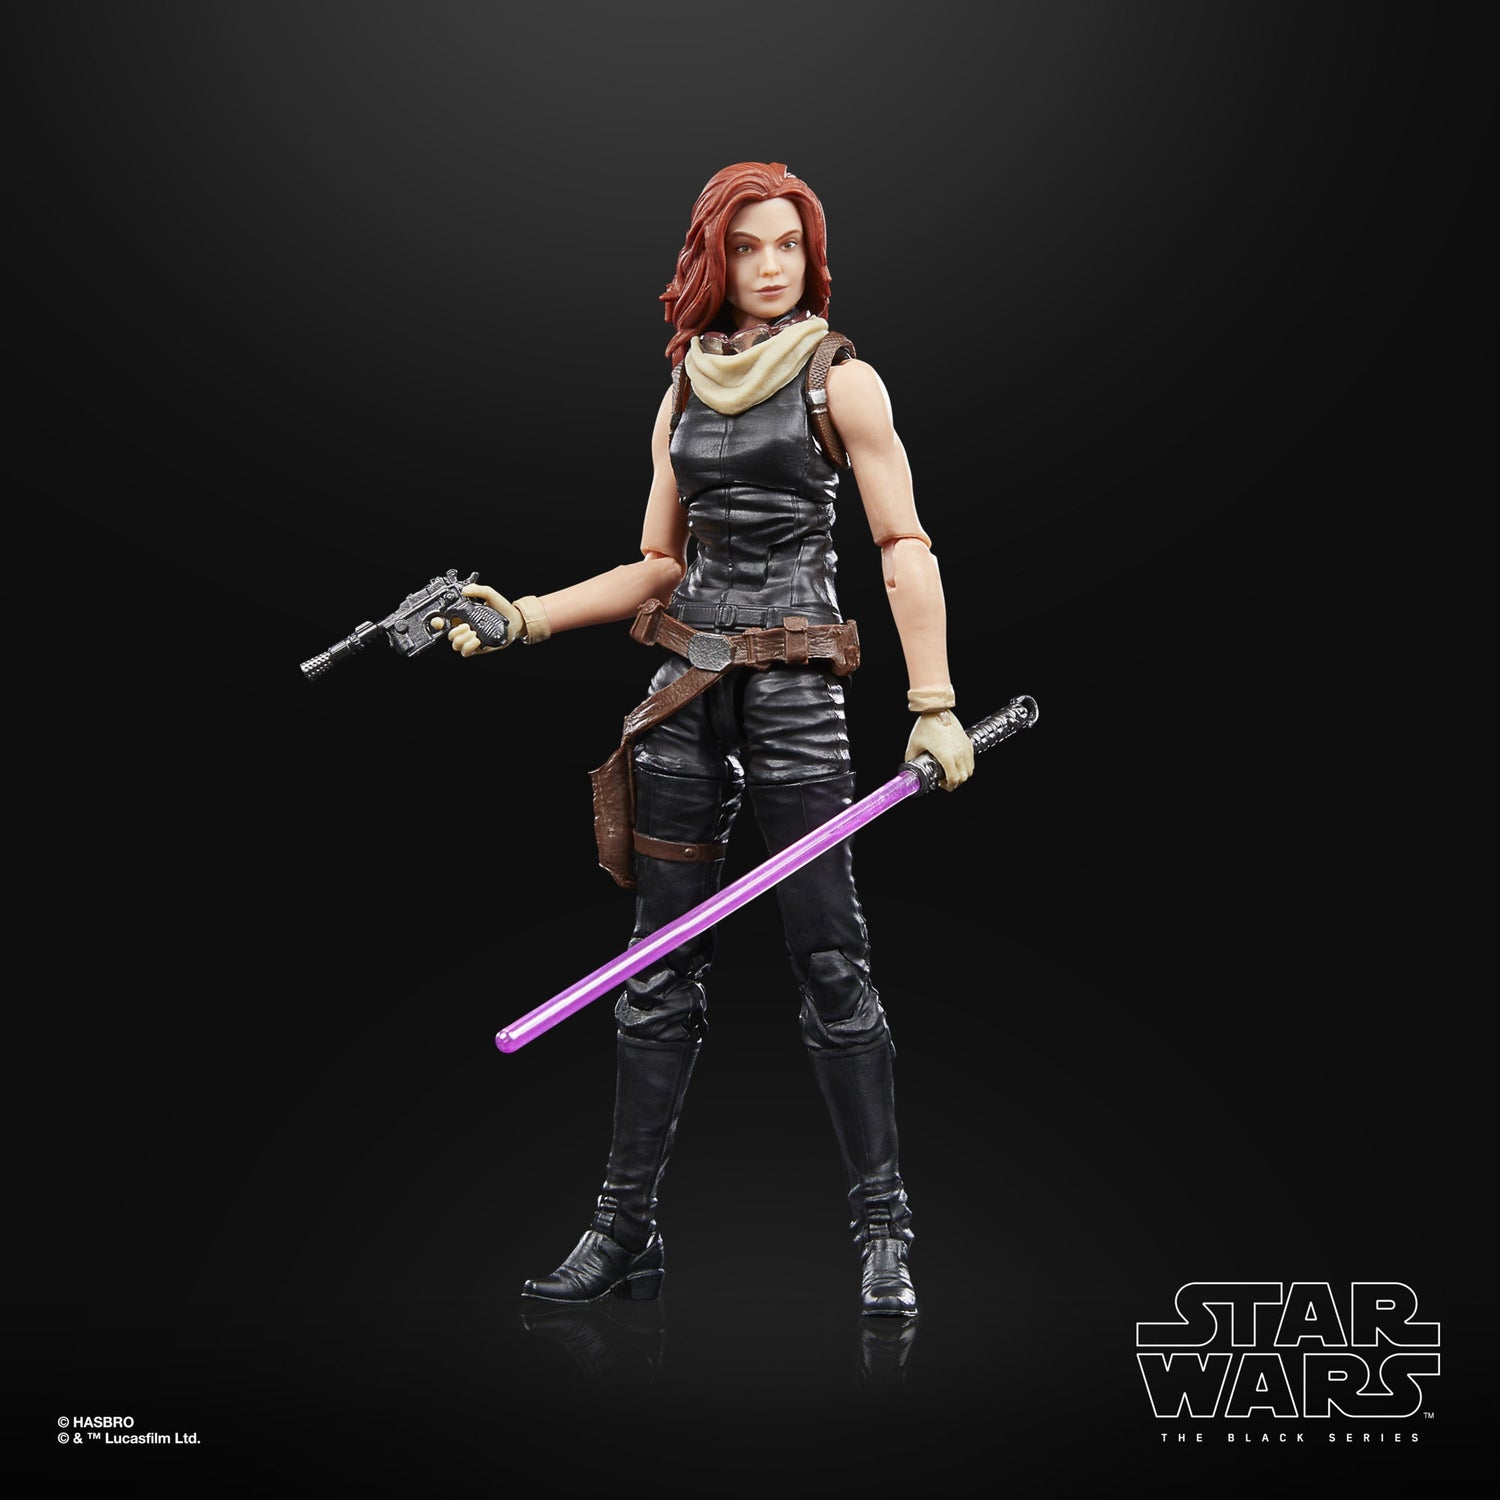 Star Wars: The Black Series Mara Jade Hasbro